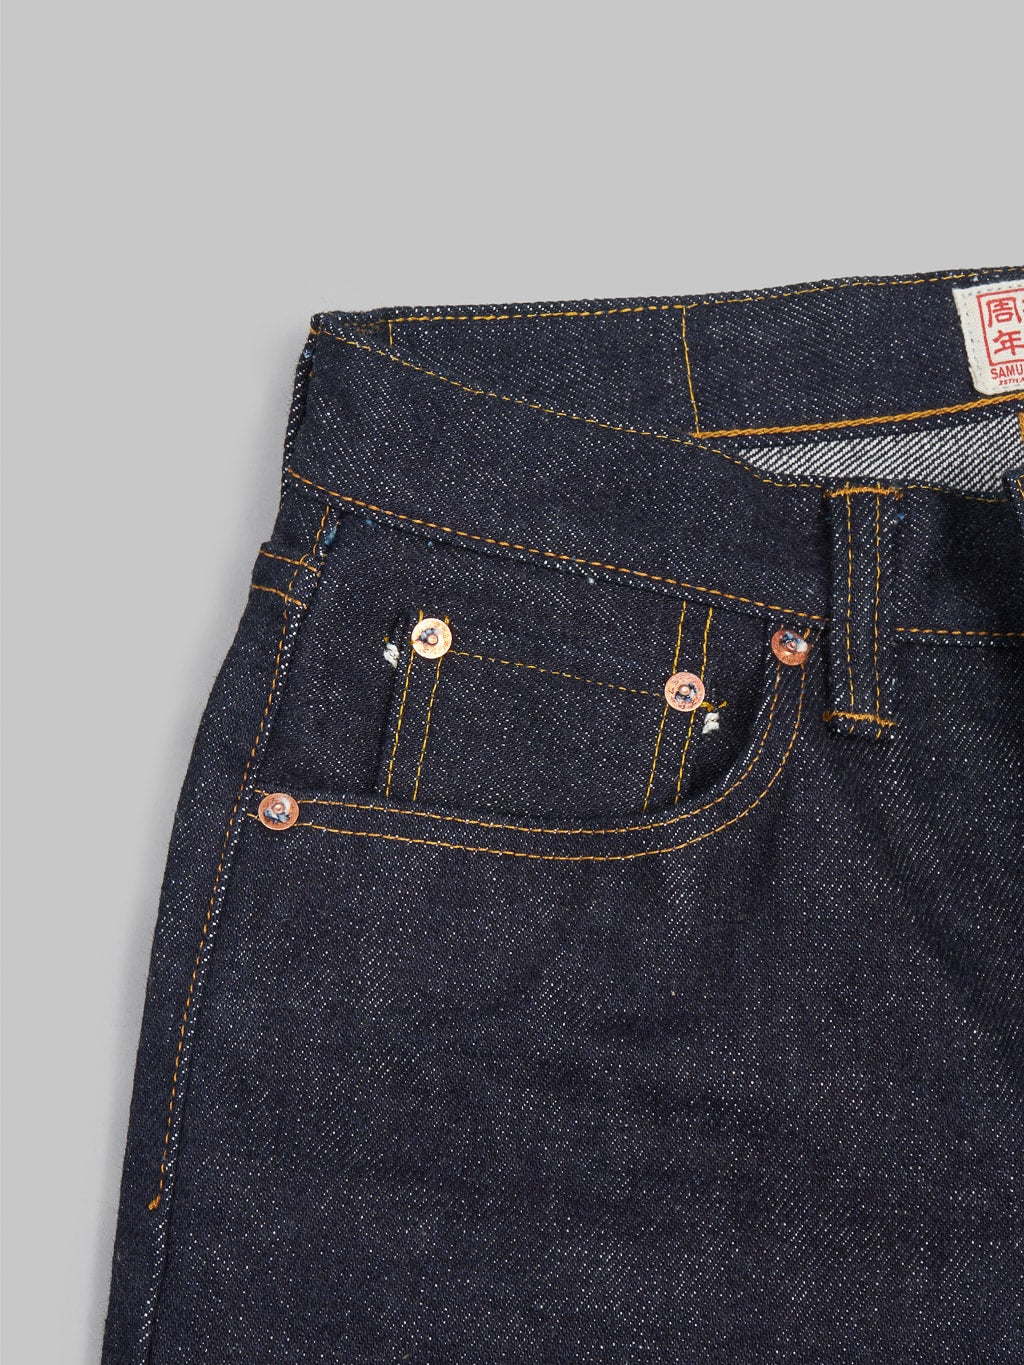 samurai jeans s710xx 25oz 25th anniversary selvedge jeans coin pocket